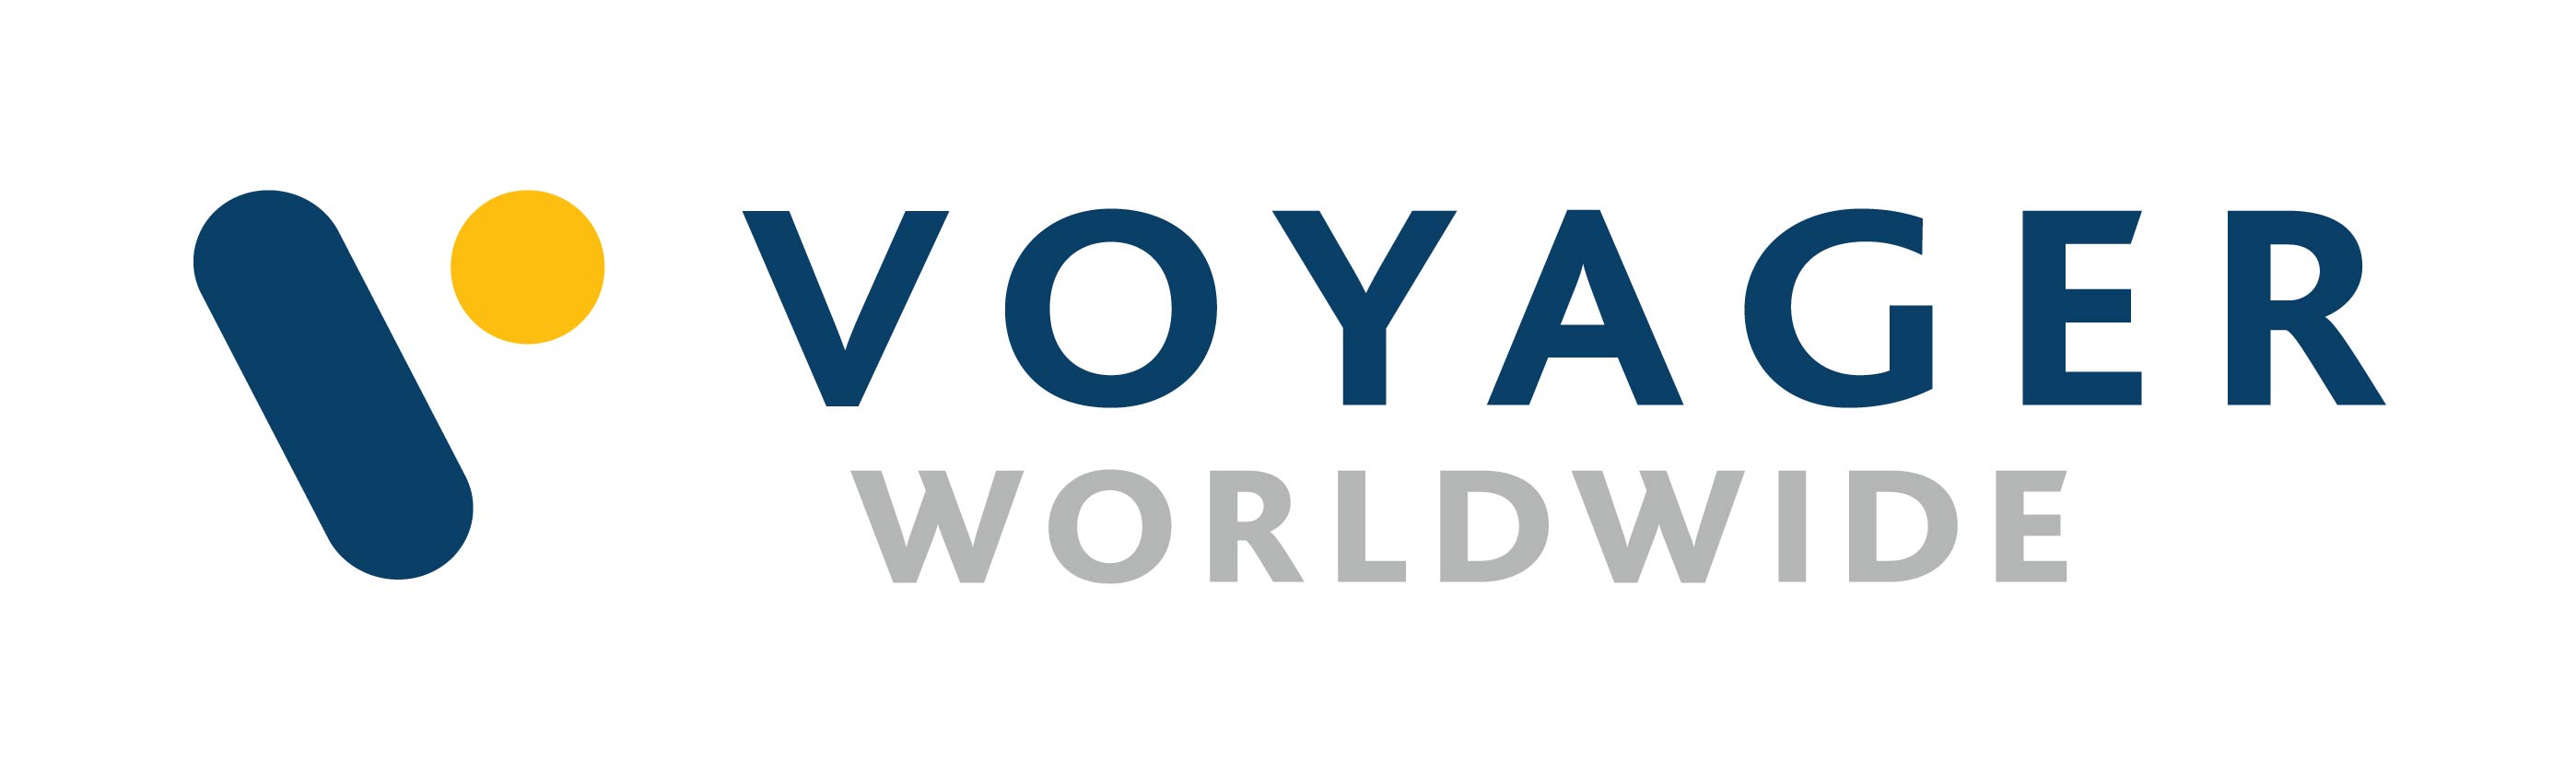 Voyager Worldwide Pte. Ltd. logo